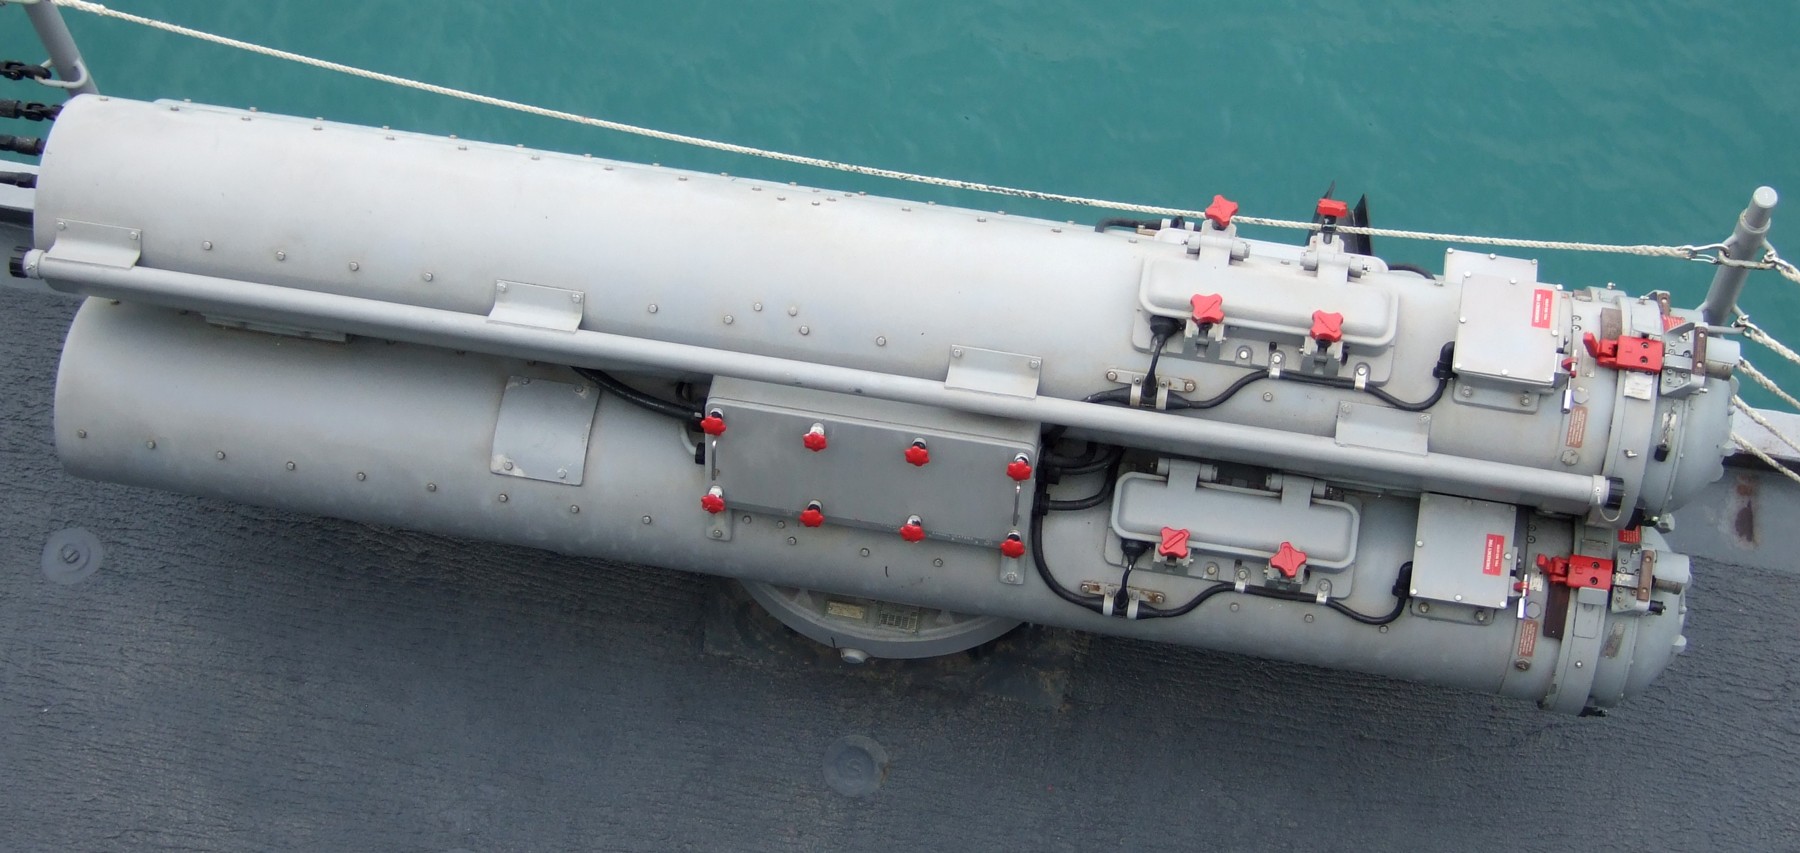 mk-32 torpedo tubes svtt 64 oliver hazard perry class frigate ffg